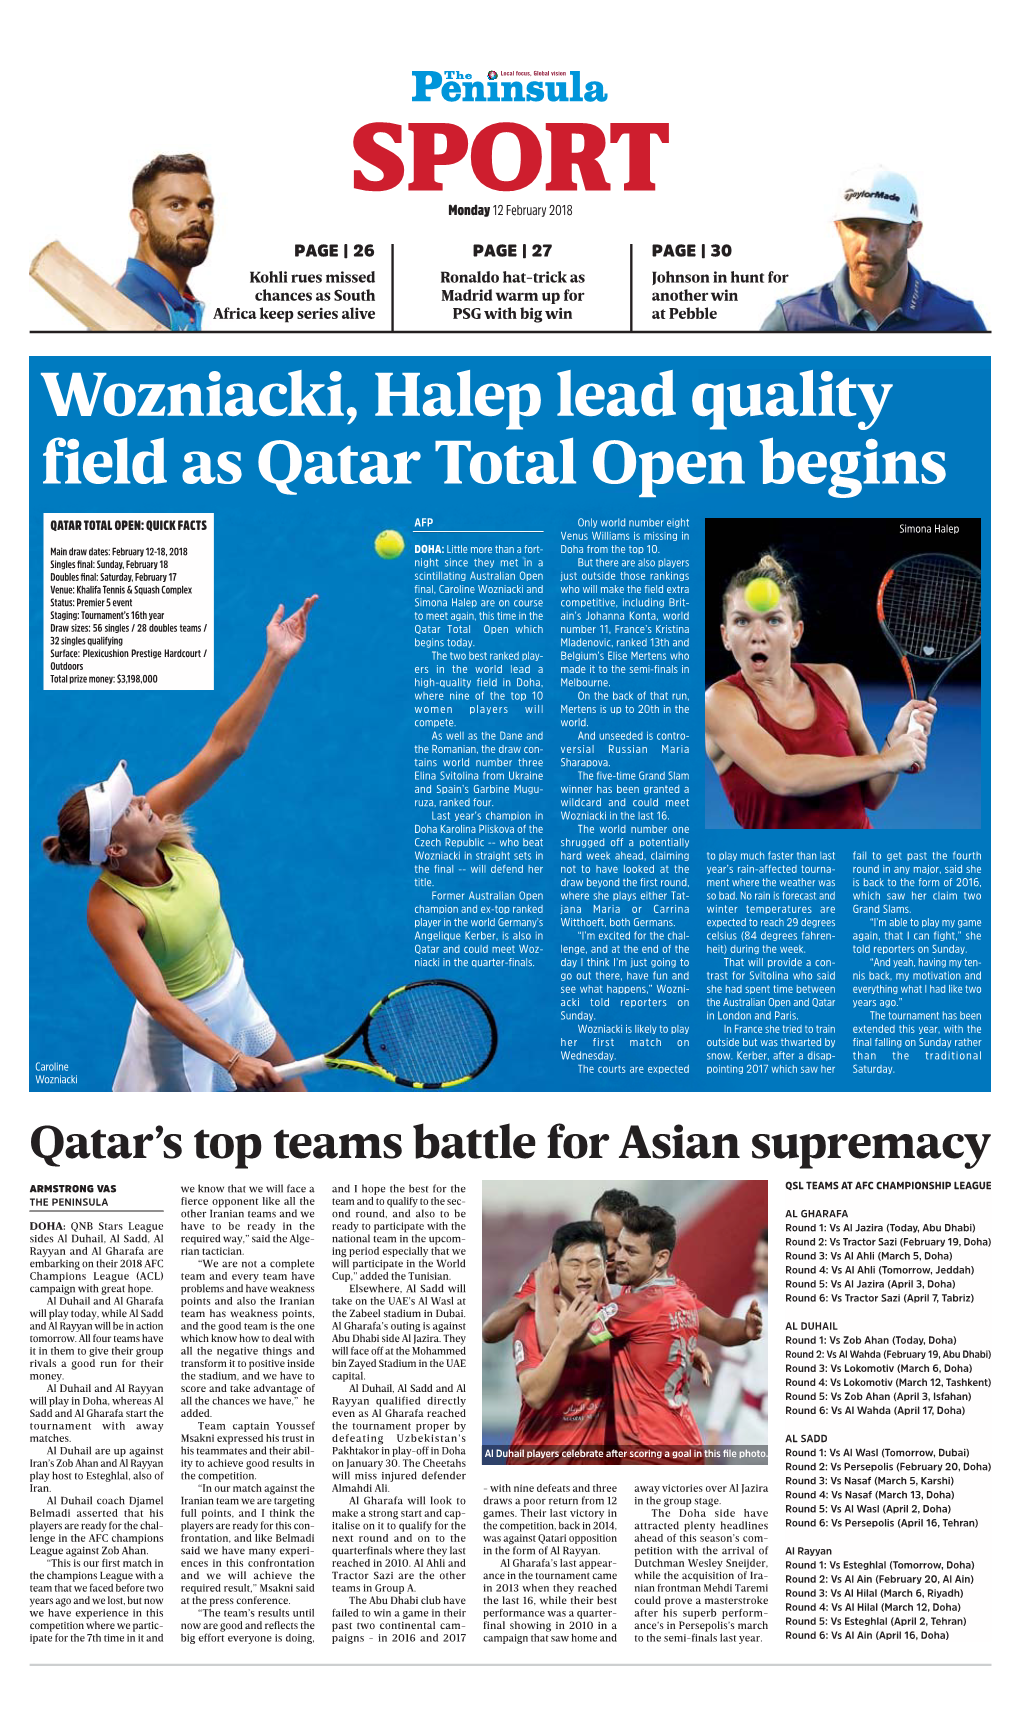 Wozniacki, Halep Lead Quality Field As Qatar Total Open Begins